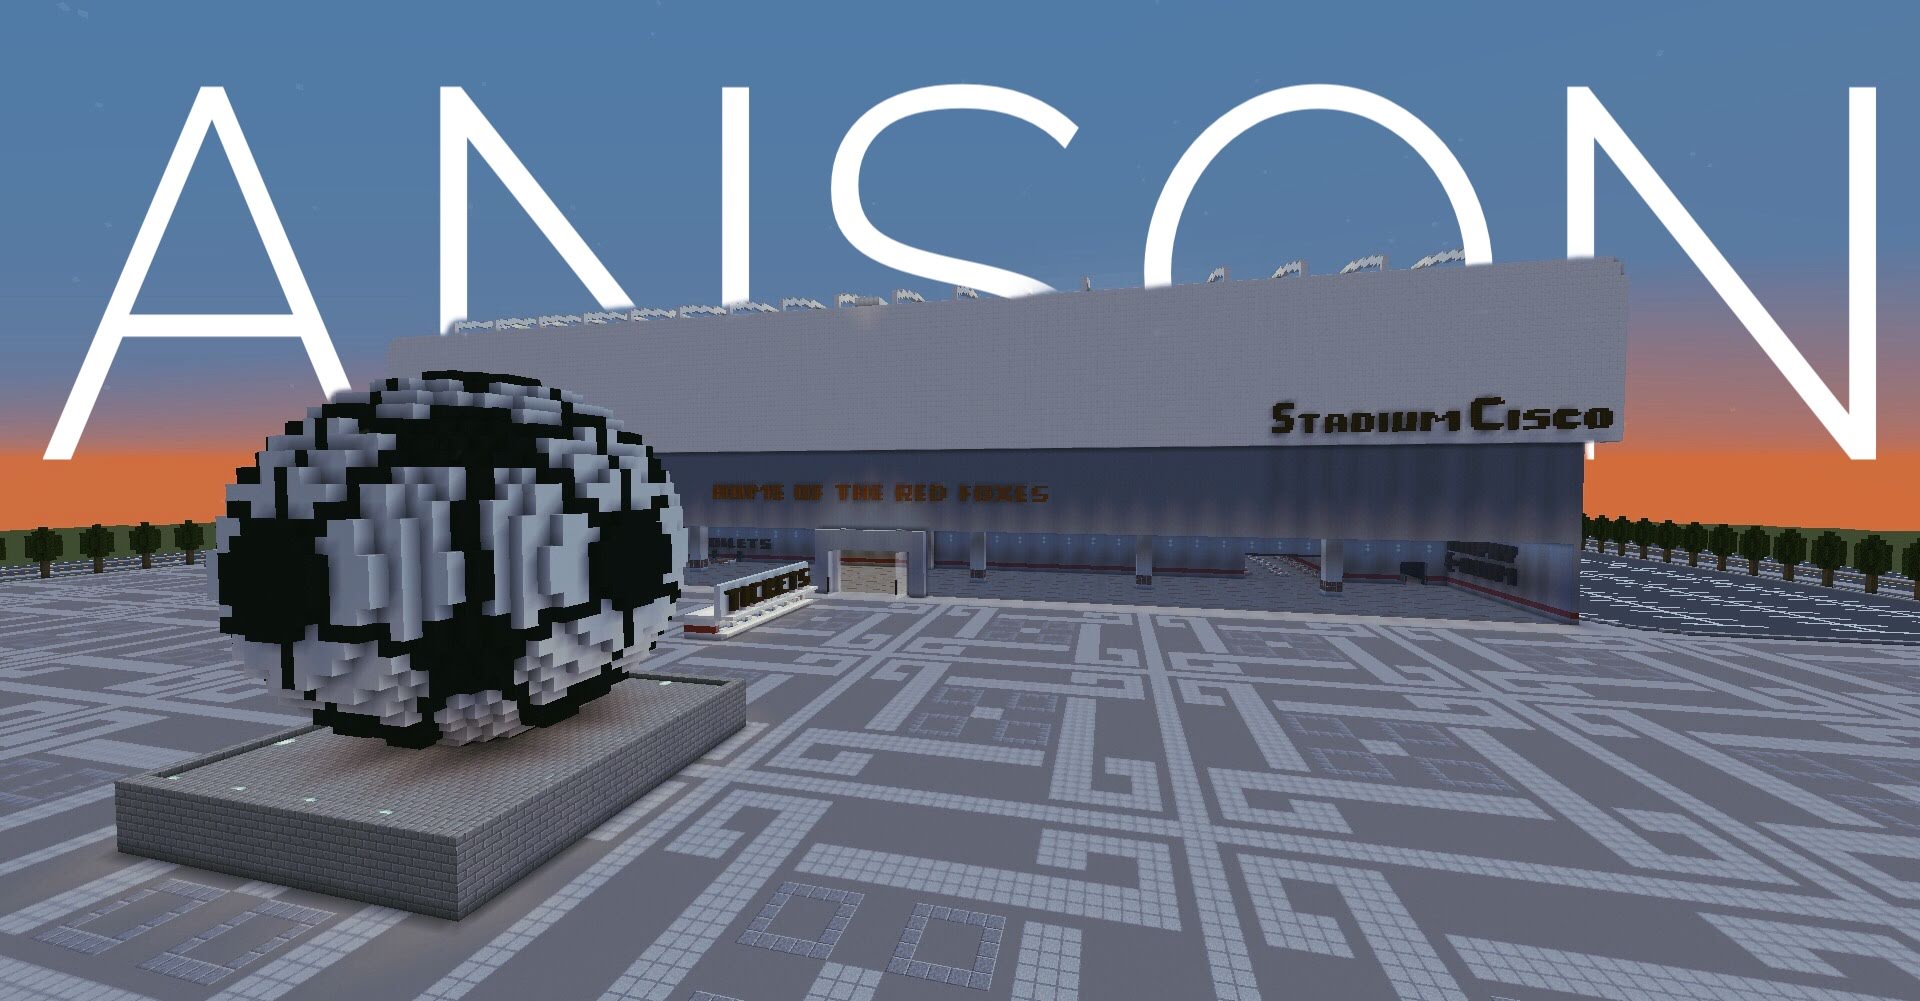 İndir Stadium Cisco için Minecraft 1.13.2